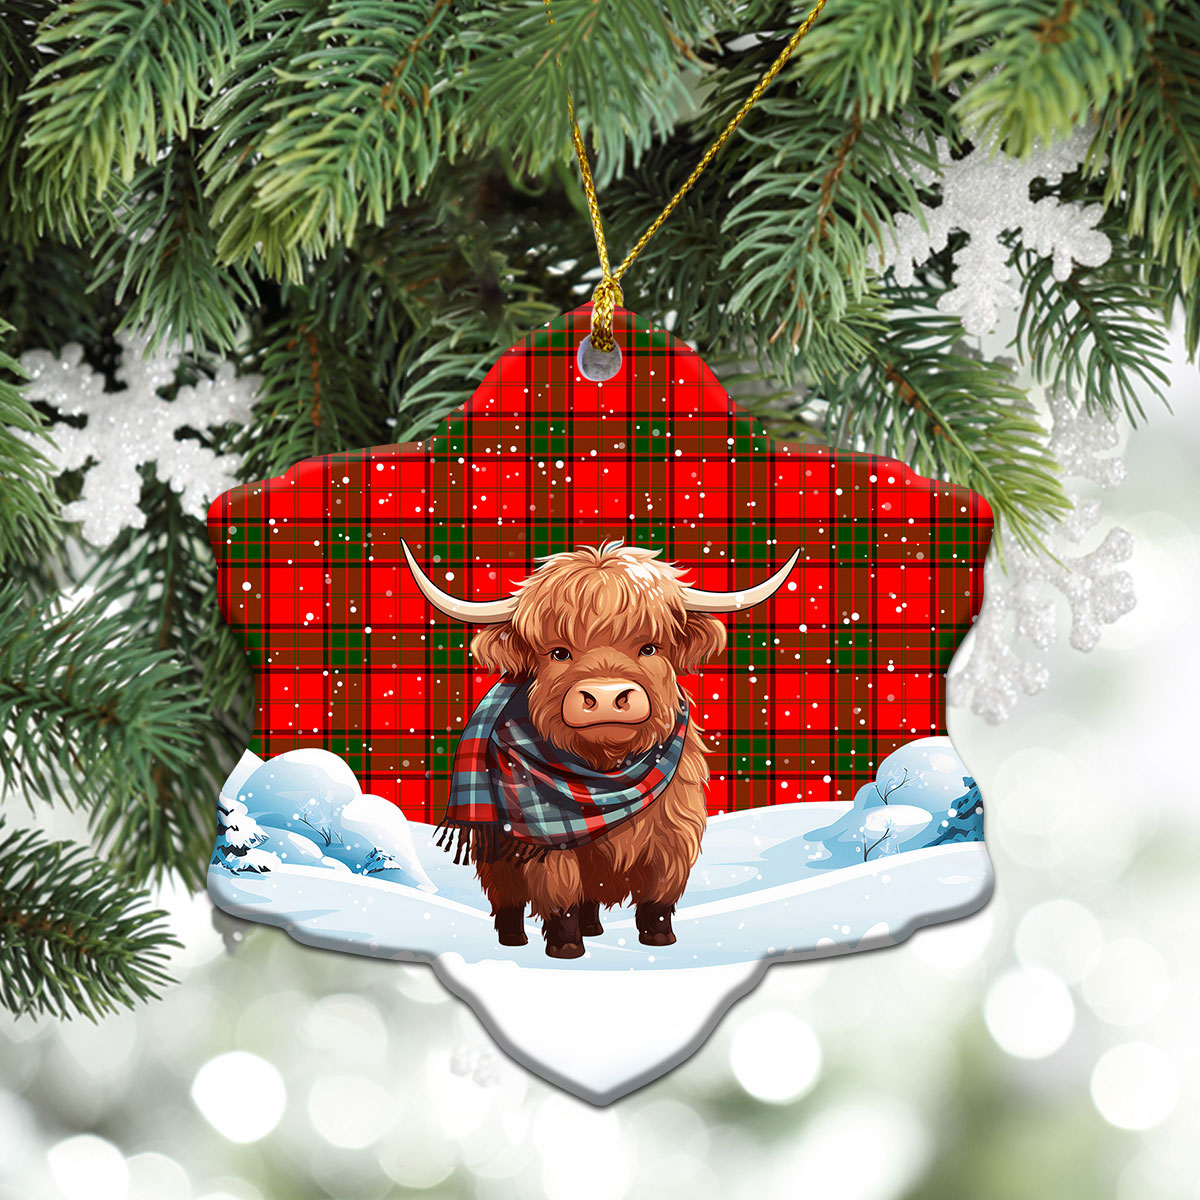 Maxtone Tartan Christmas Ceramic Ornament - Highland Cows Snow Style